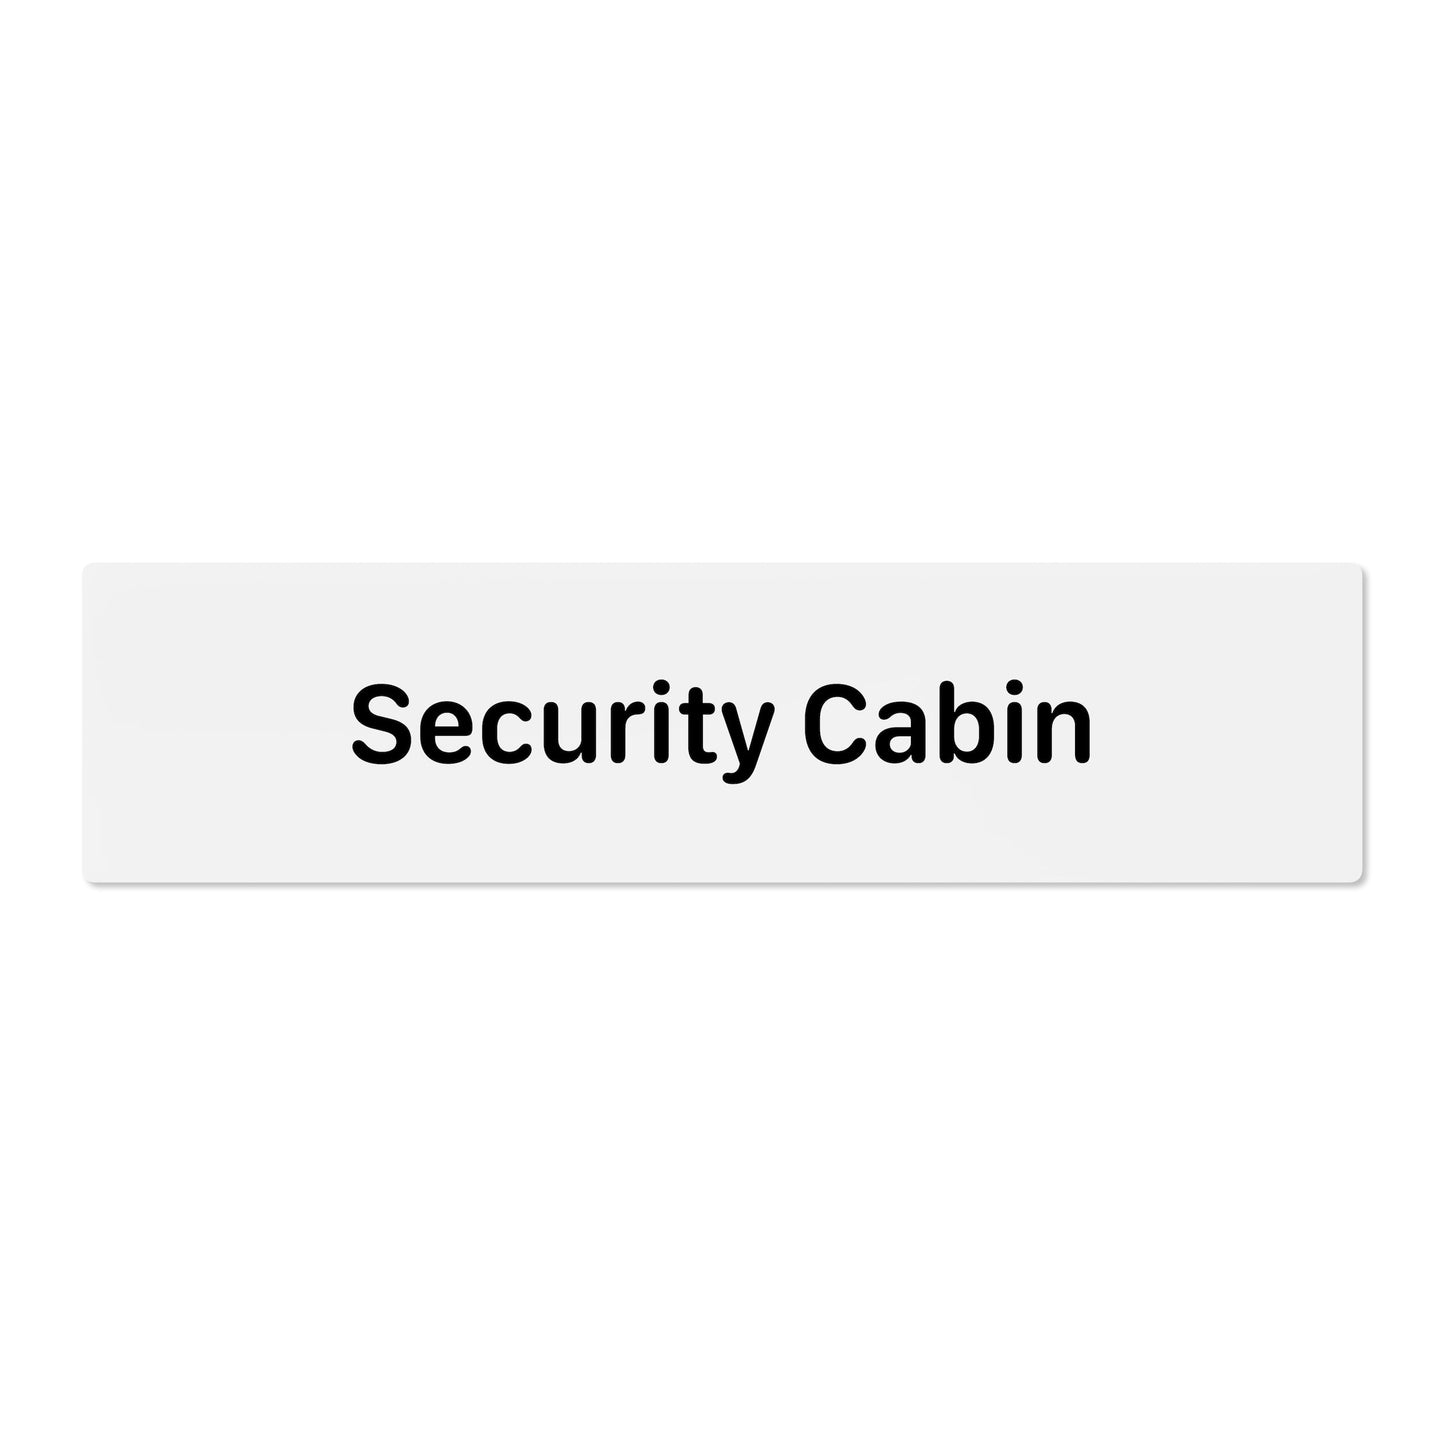 Security Cabin